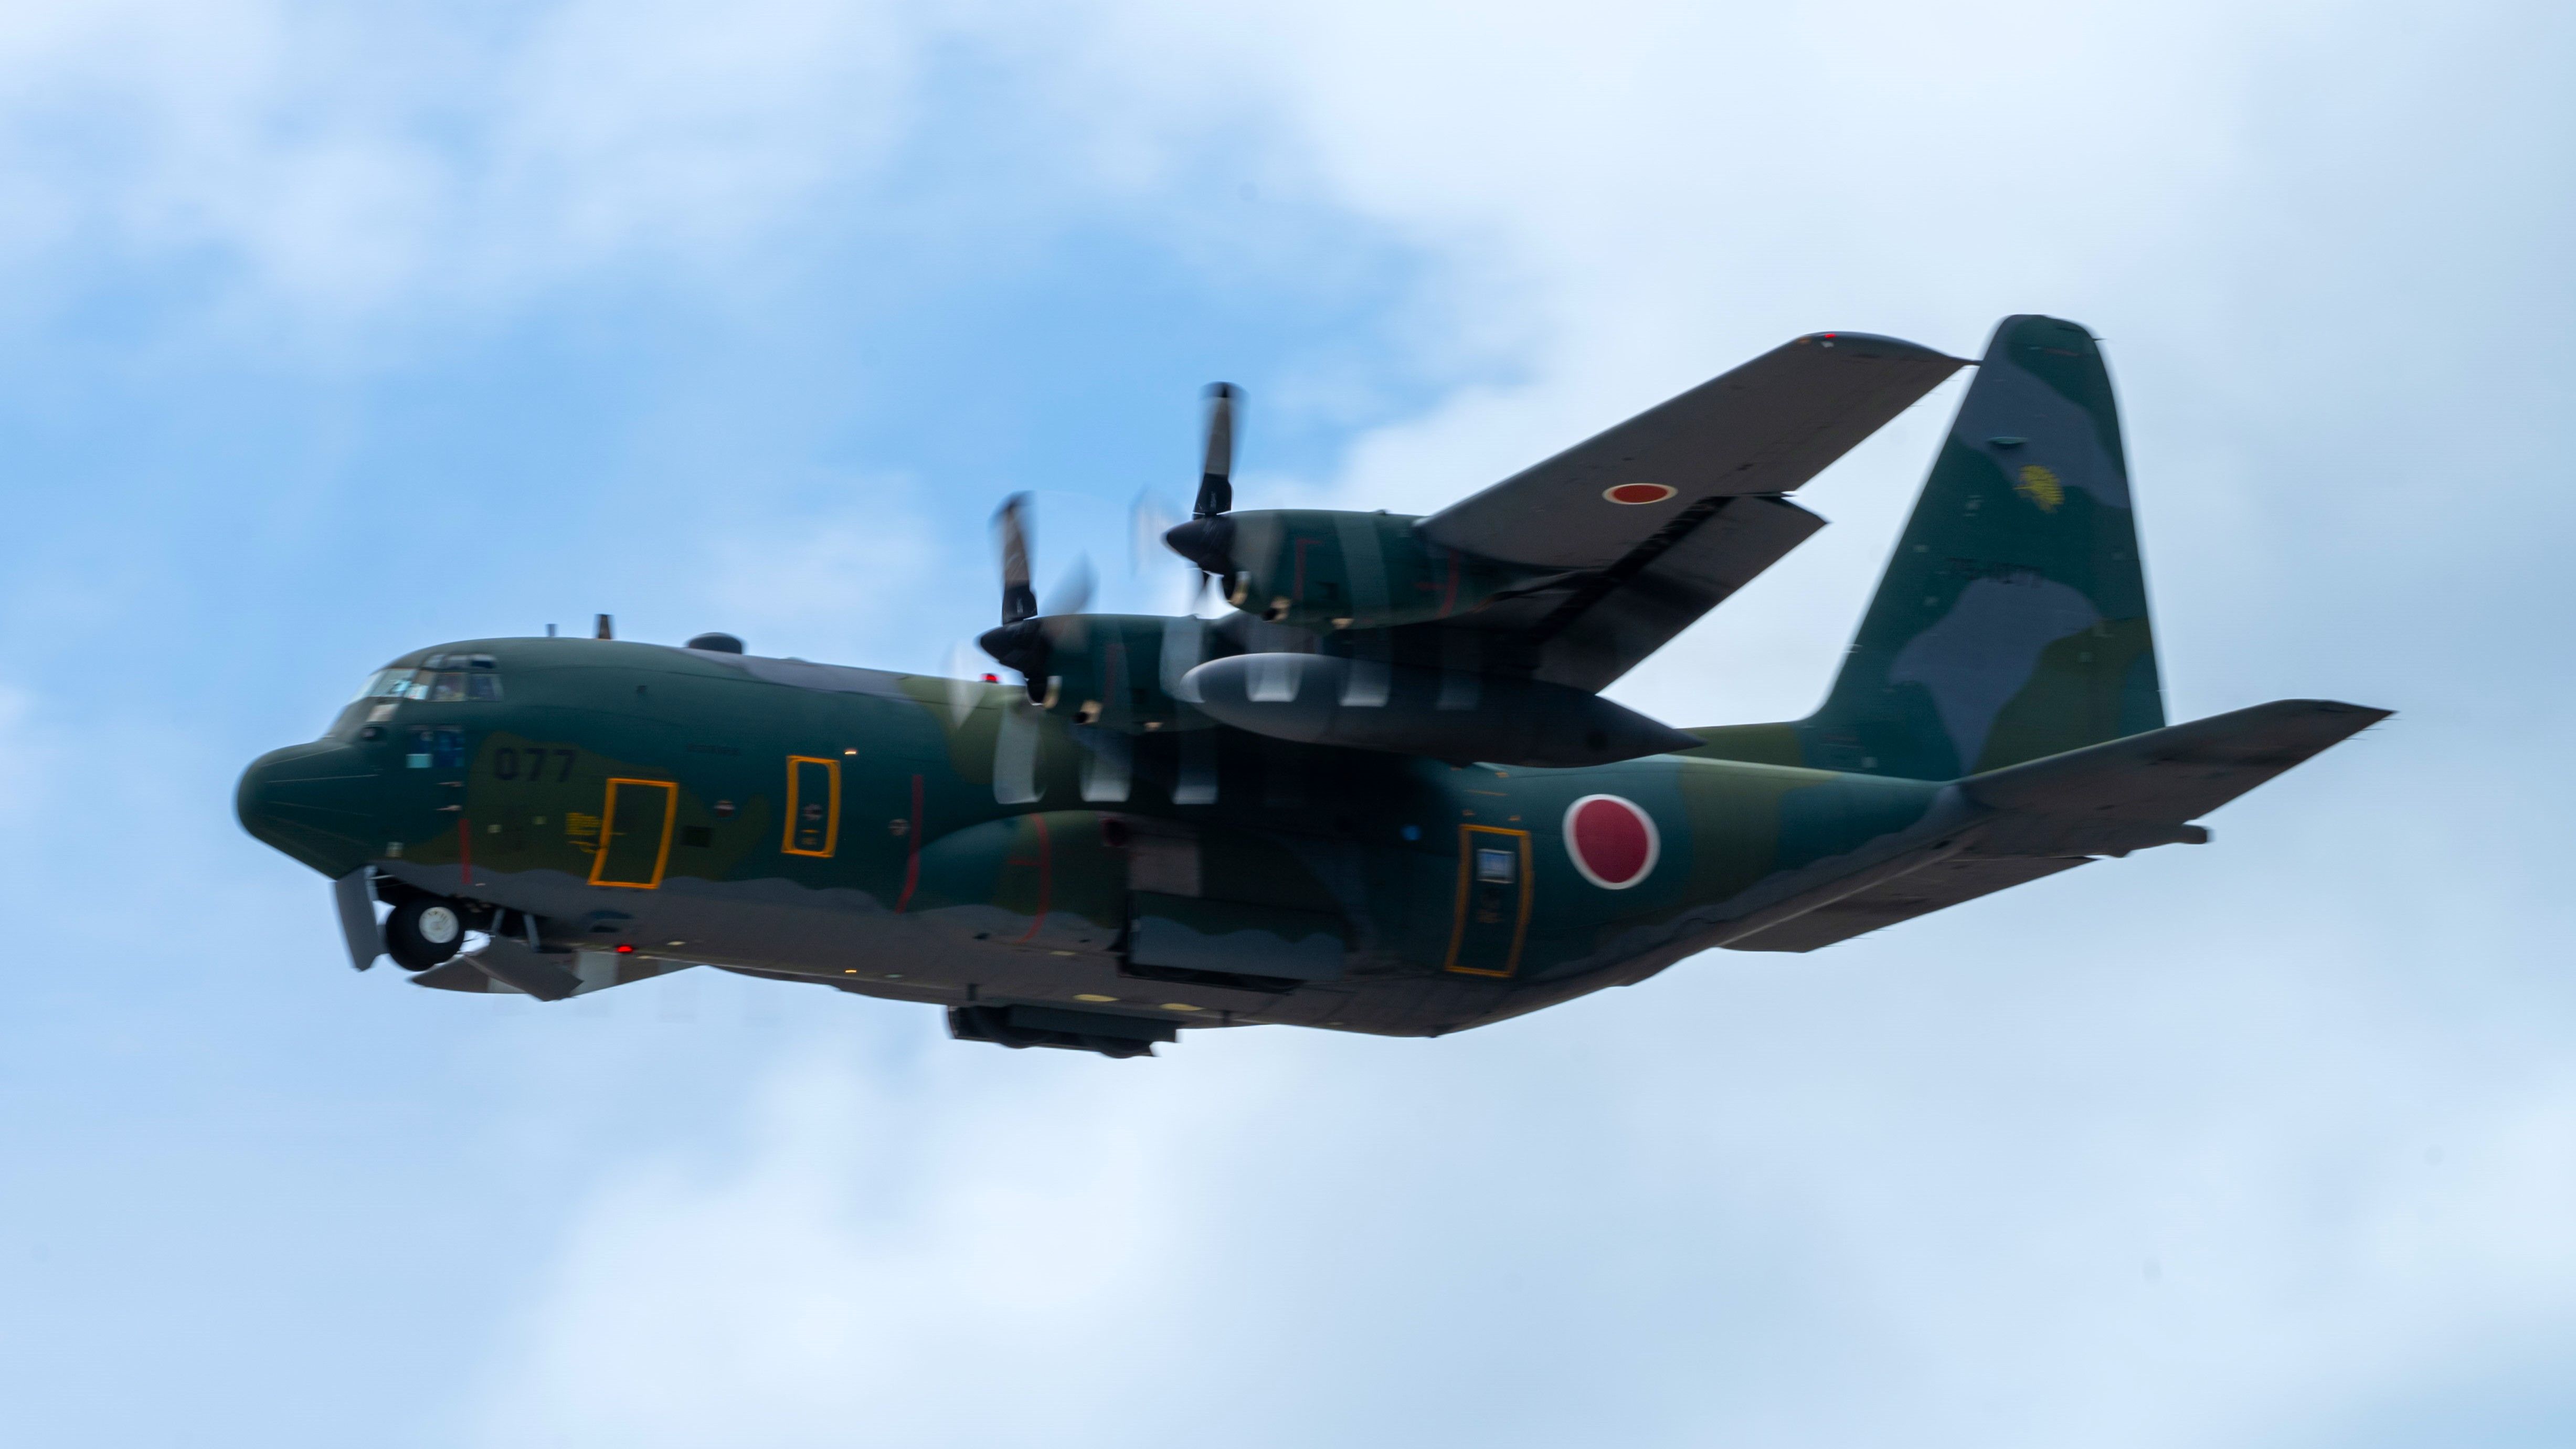 8160622 - 16x9 - Japanese Air Self-Defense Forces C-130 Hercules